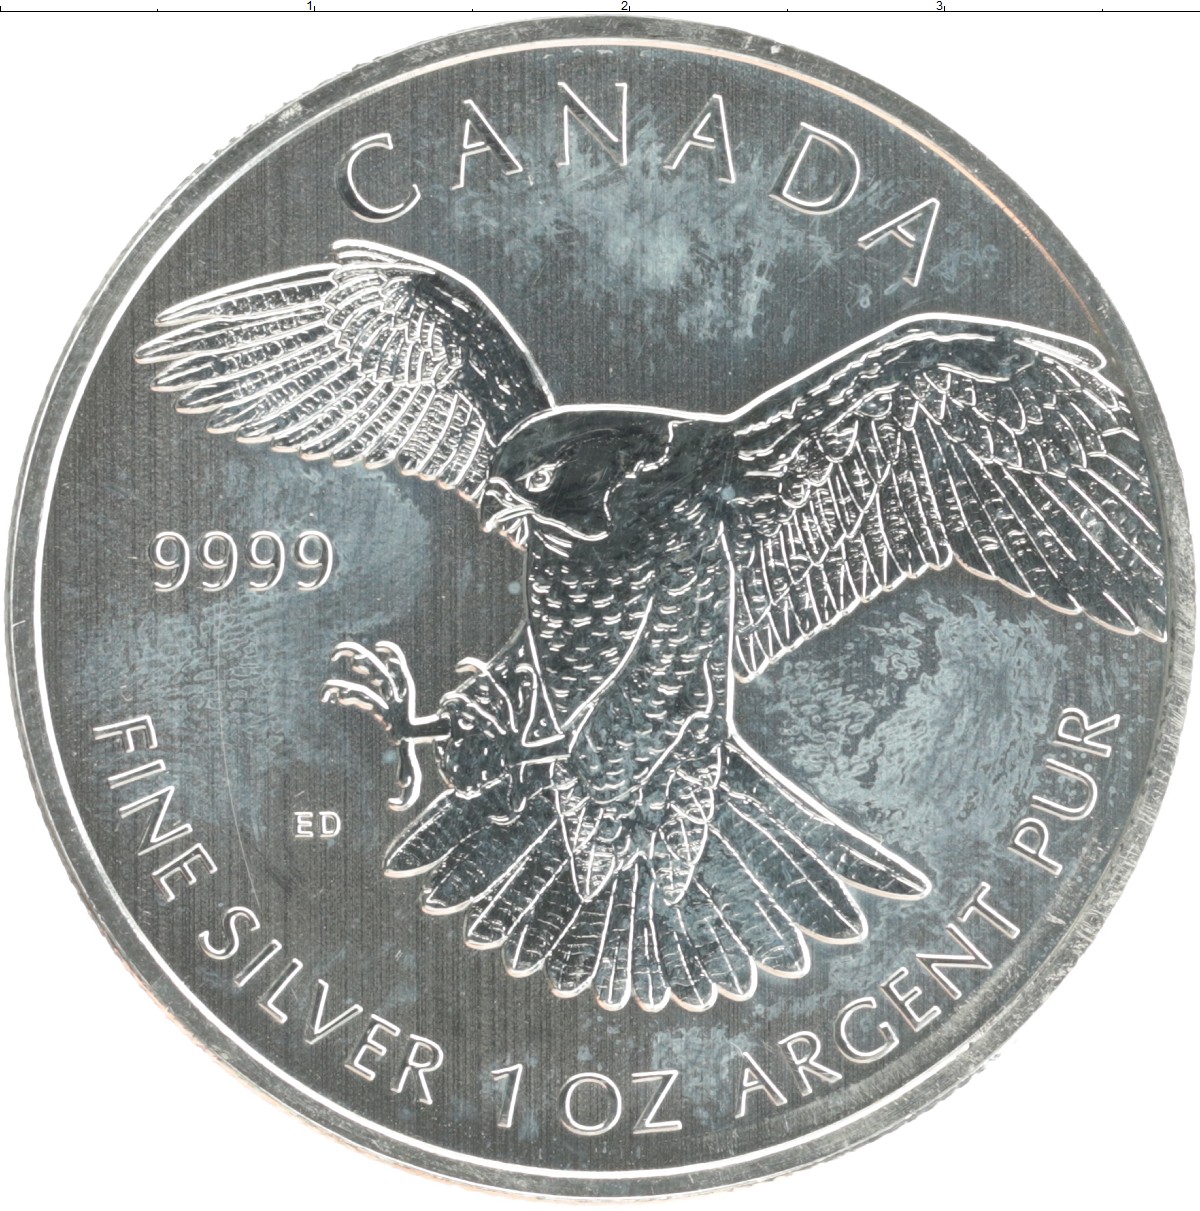 117 долларов в рублях. Канадский 5 доллар 2014. Канада 5 долларов Коршун. 5 Долларов 2014 Канада Орлан. 25 Долларов Канада фигурное катание 2014 серебро монета.